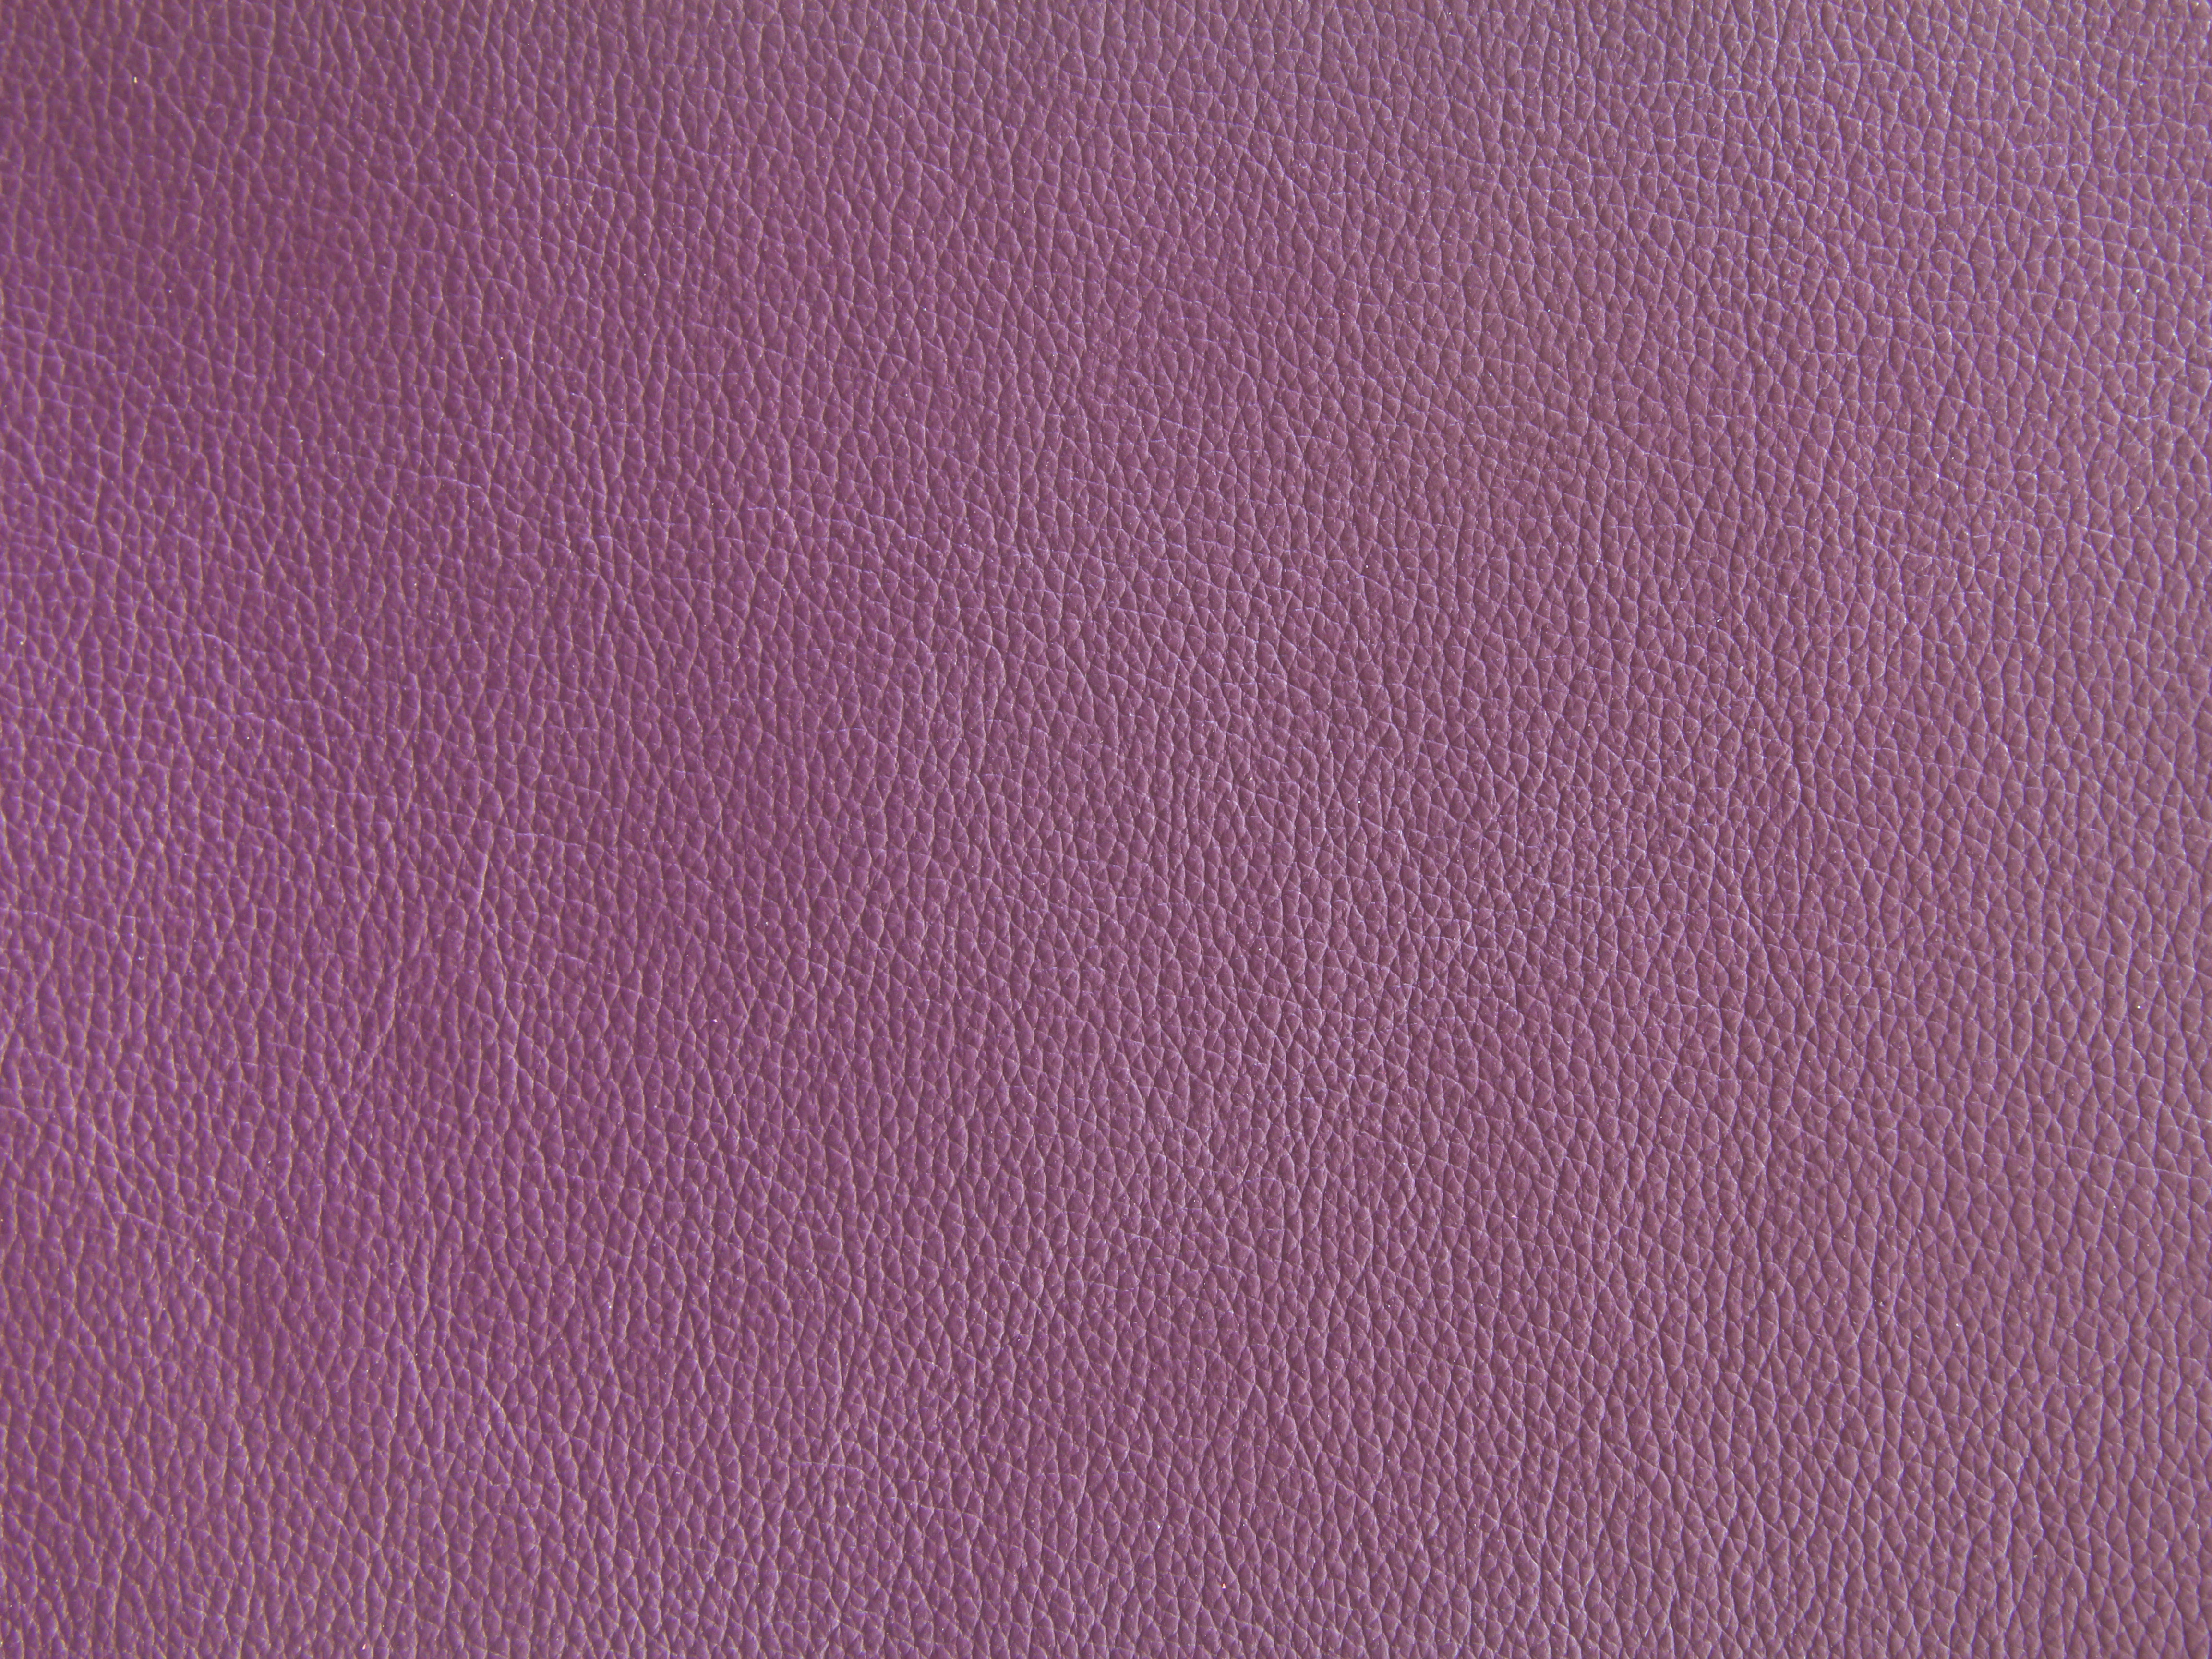 purple-leather-texture-colorful-stock-wallpaper-design-fabric-photo ...